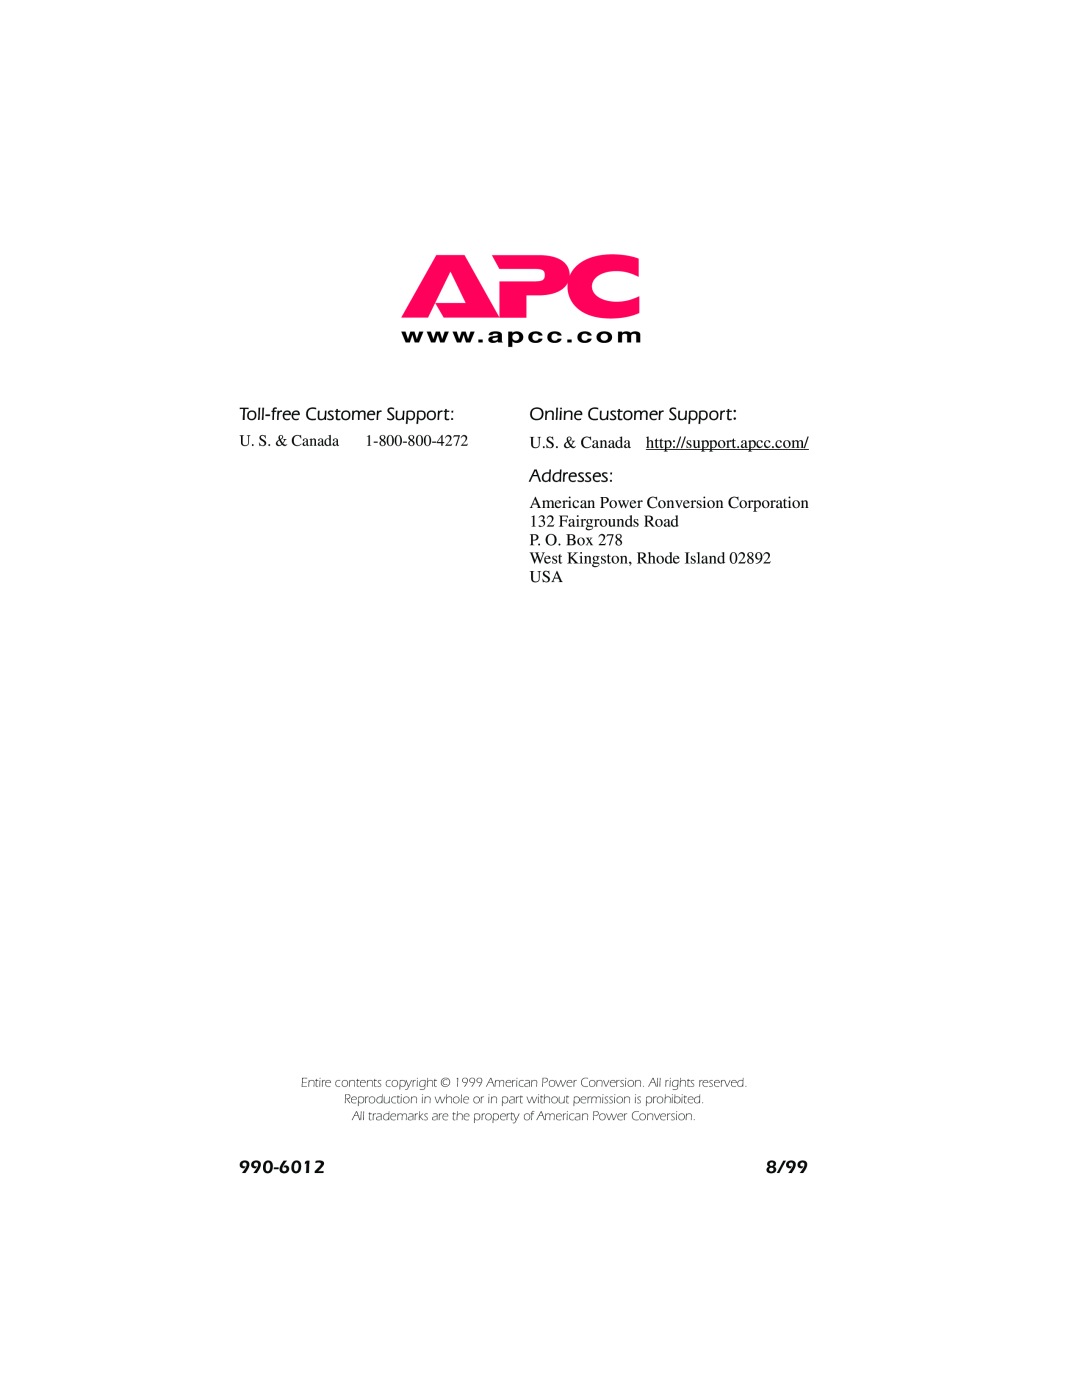 APC AP9225 manual w w w. a p c c . c o m, Toll-free Customer Support, Online Customer Support, Addresses, 990-6012, 8/99 